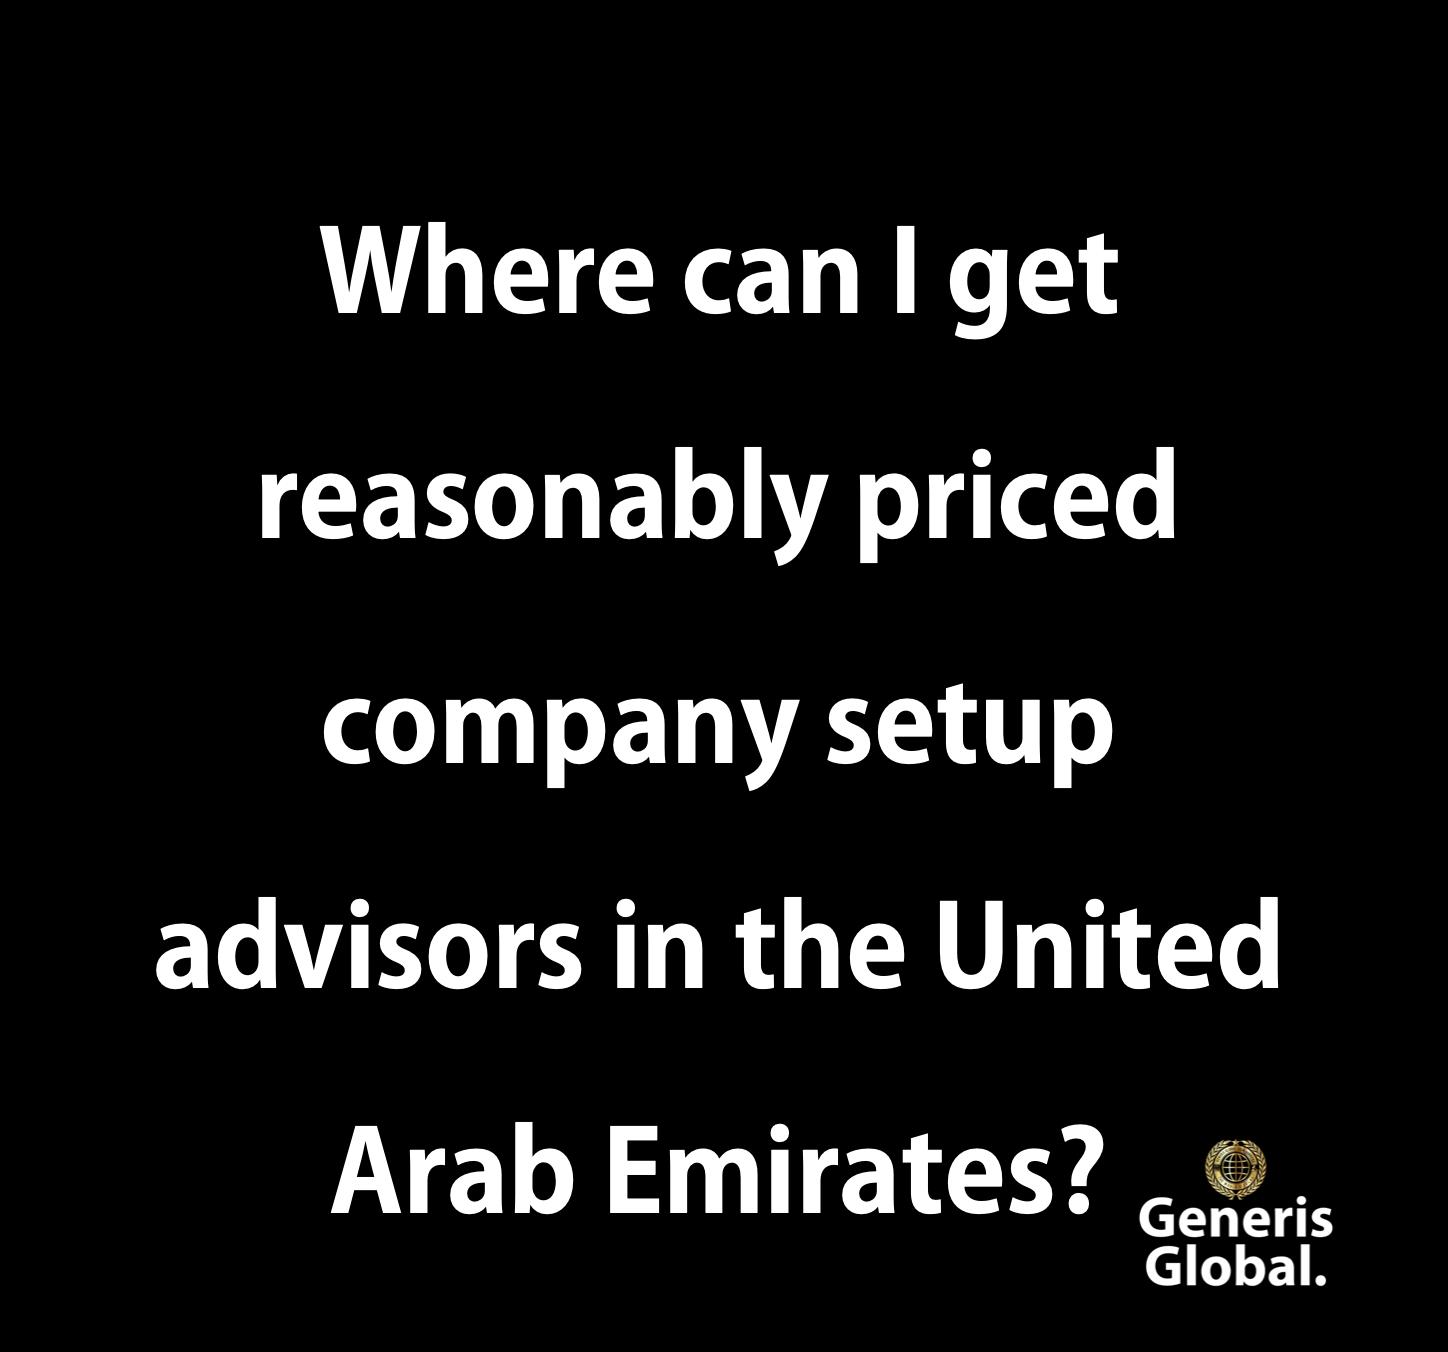 Where can I get reasonably priced company setup advisors in the United Arab Emirates?